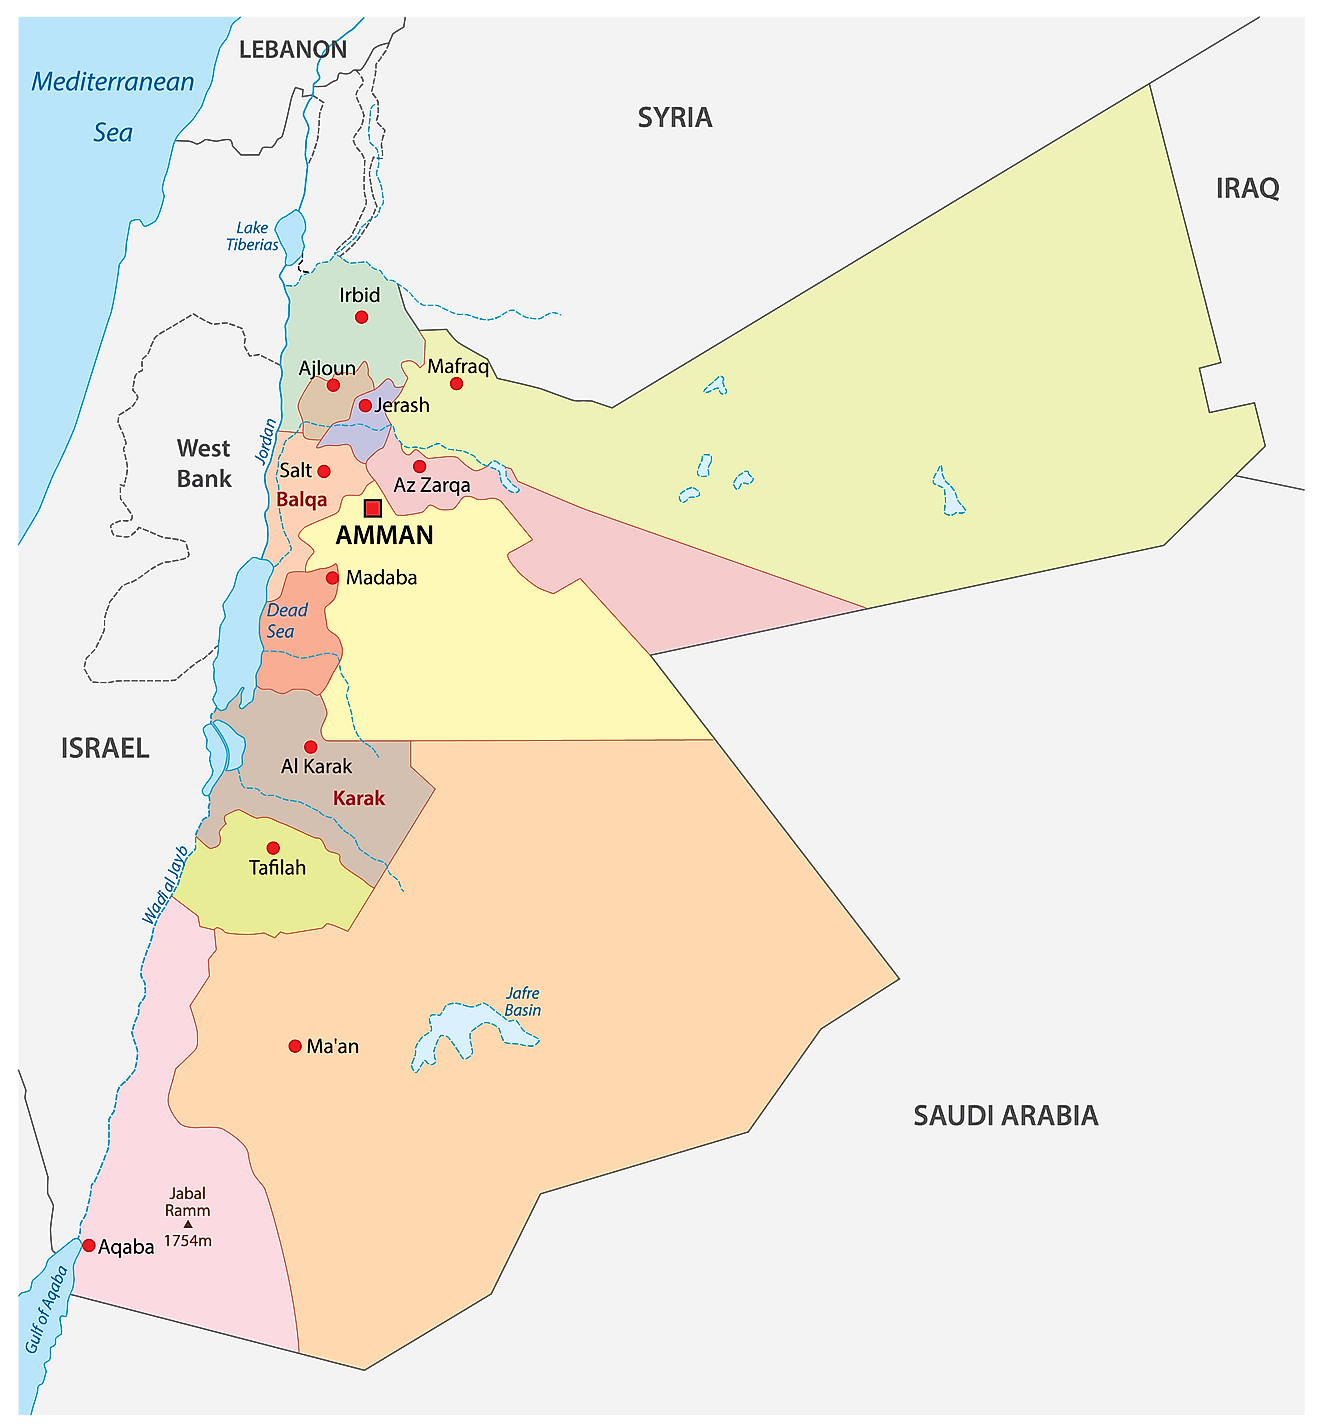 Jordan Maps \u0026 Facts - World Atlas